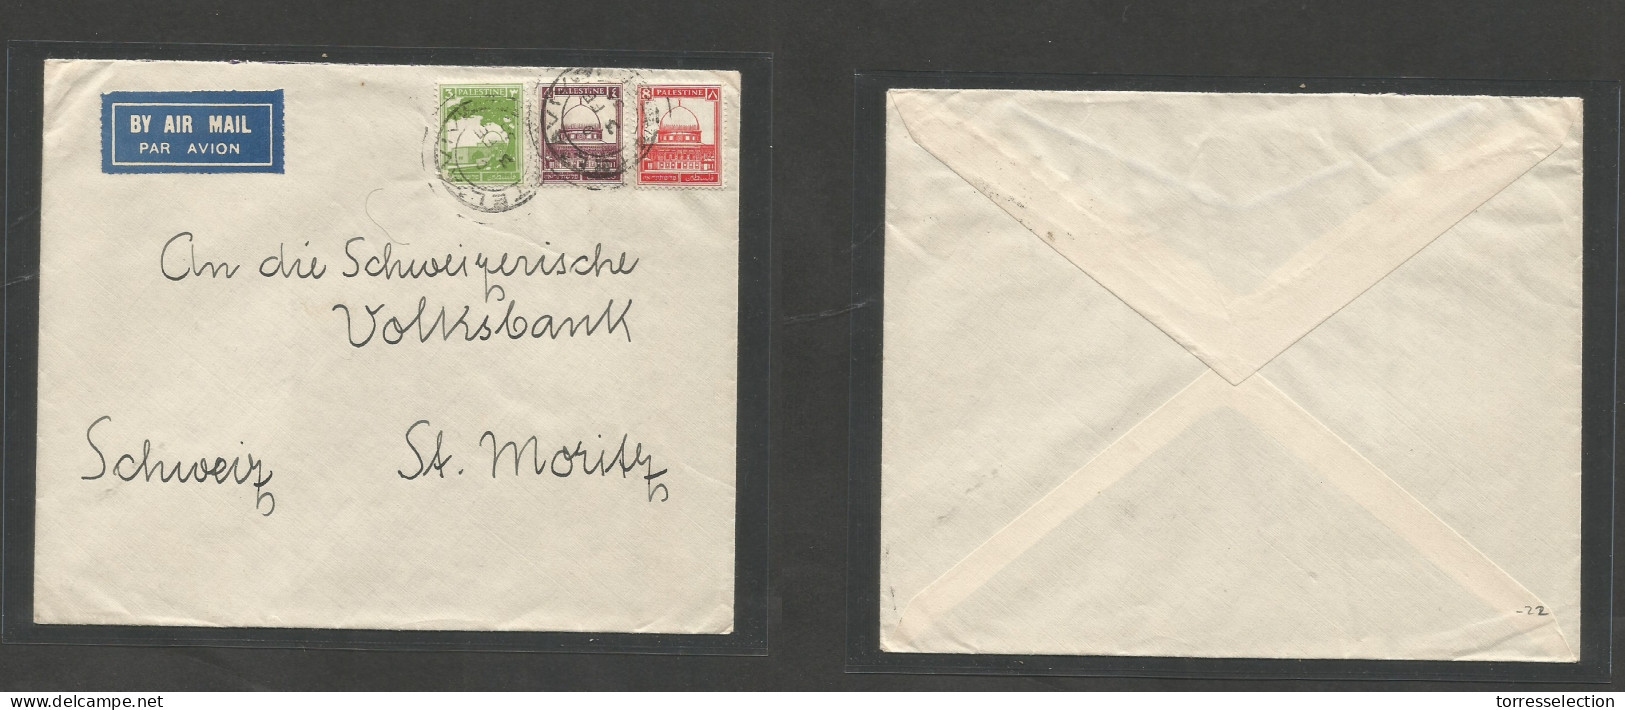 PALESTINE. 1935 (3 Febr) Tel Aviv - Switzerland, St. Moritz. Air Multifkd Tricolor Envelope, Tied Cds. VF Usage. SALE. - Palestina